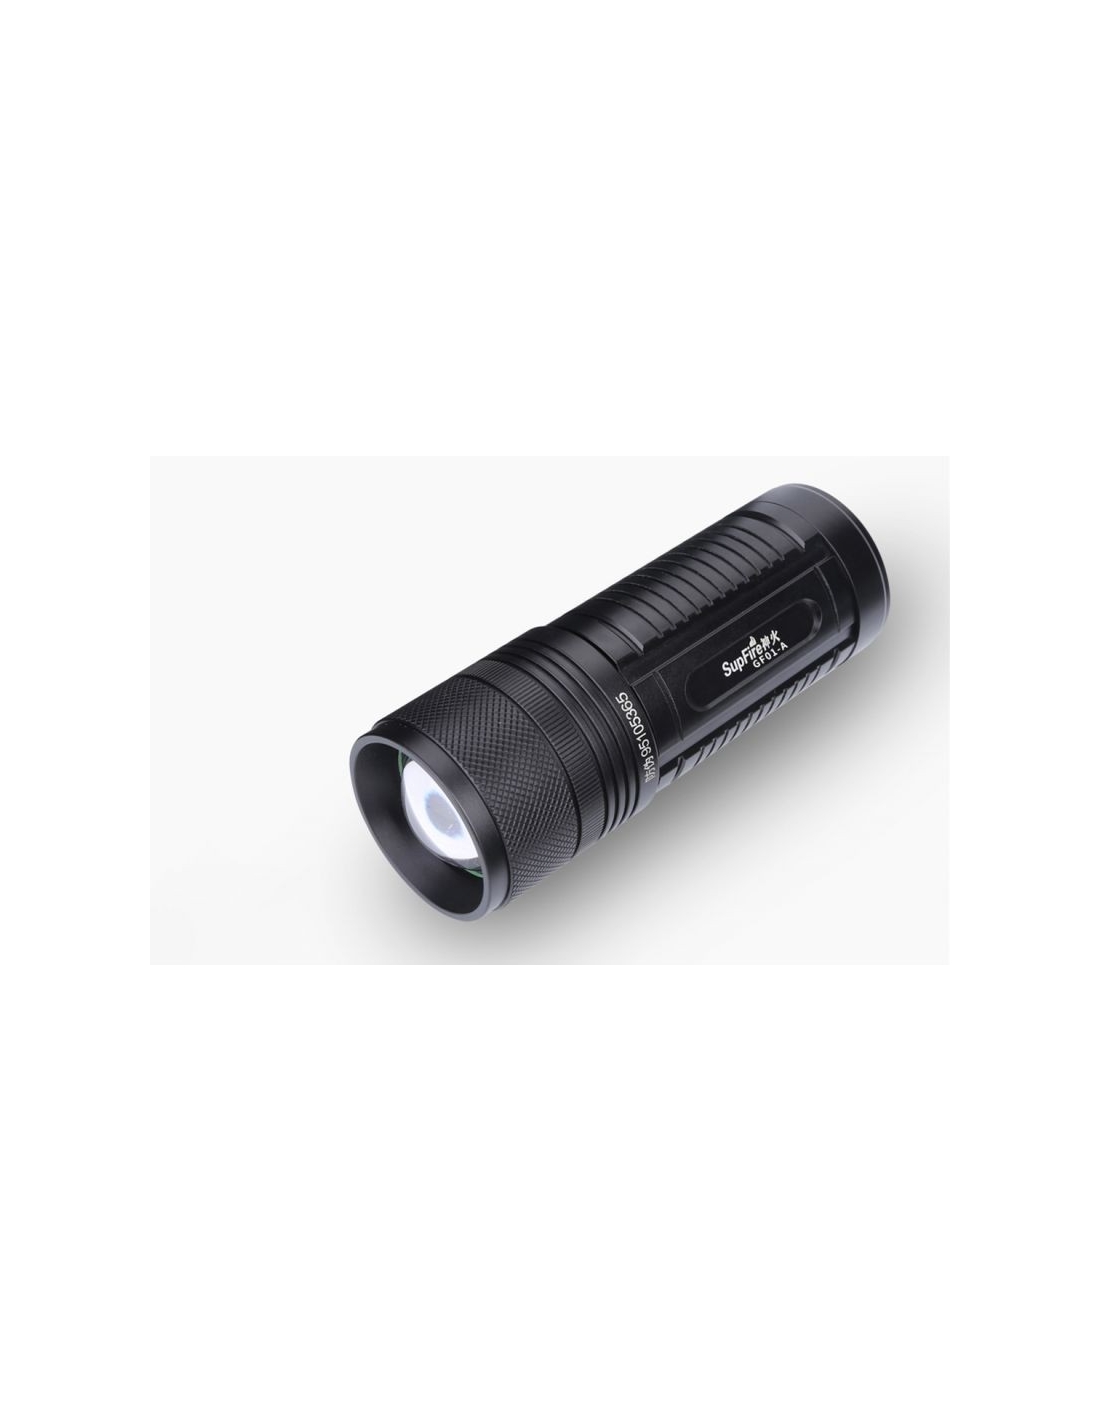 SupFire GF01-A fishing flashlight, 4 colors, lighting distance 375m